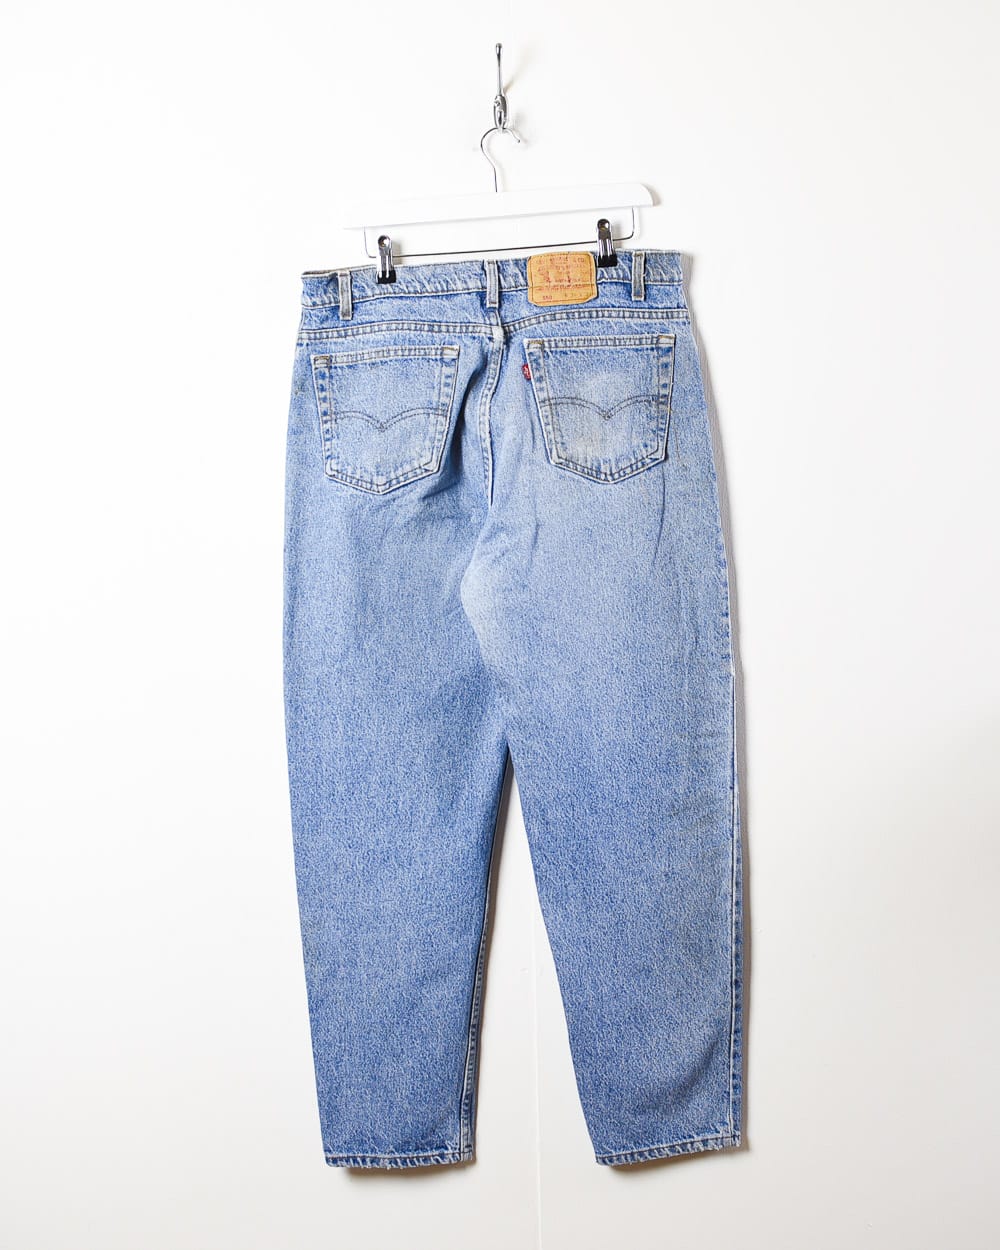 Blue Levi's USA 550 Jeans - W36 L30